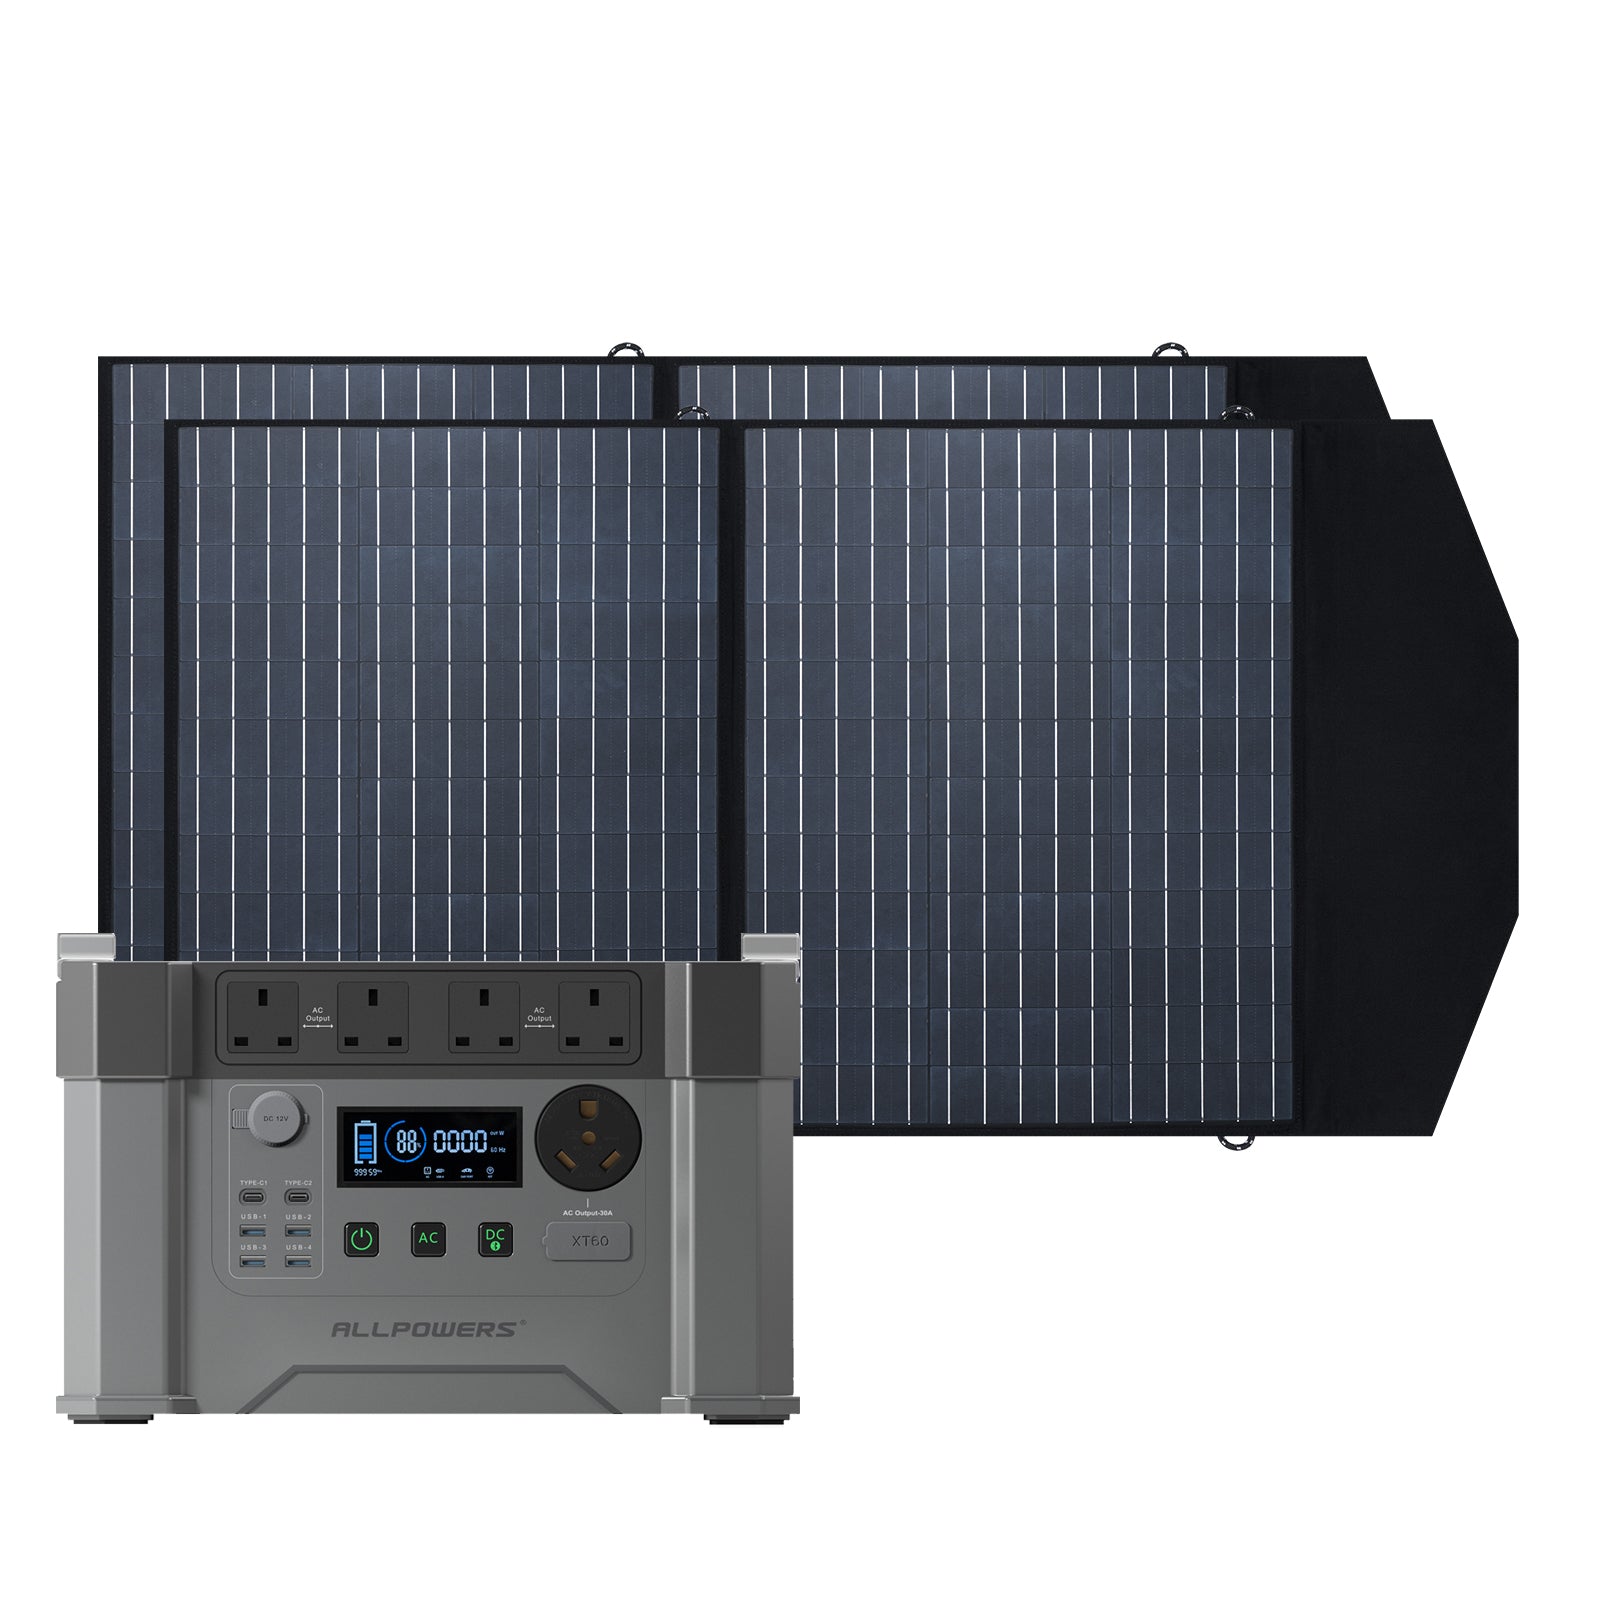 ALLPOWERS Solar Generator 2400W (S2000 Pro + SP027 100W Solar Panel)